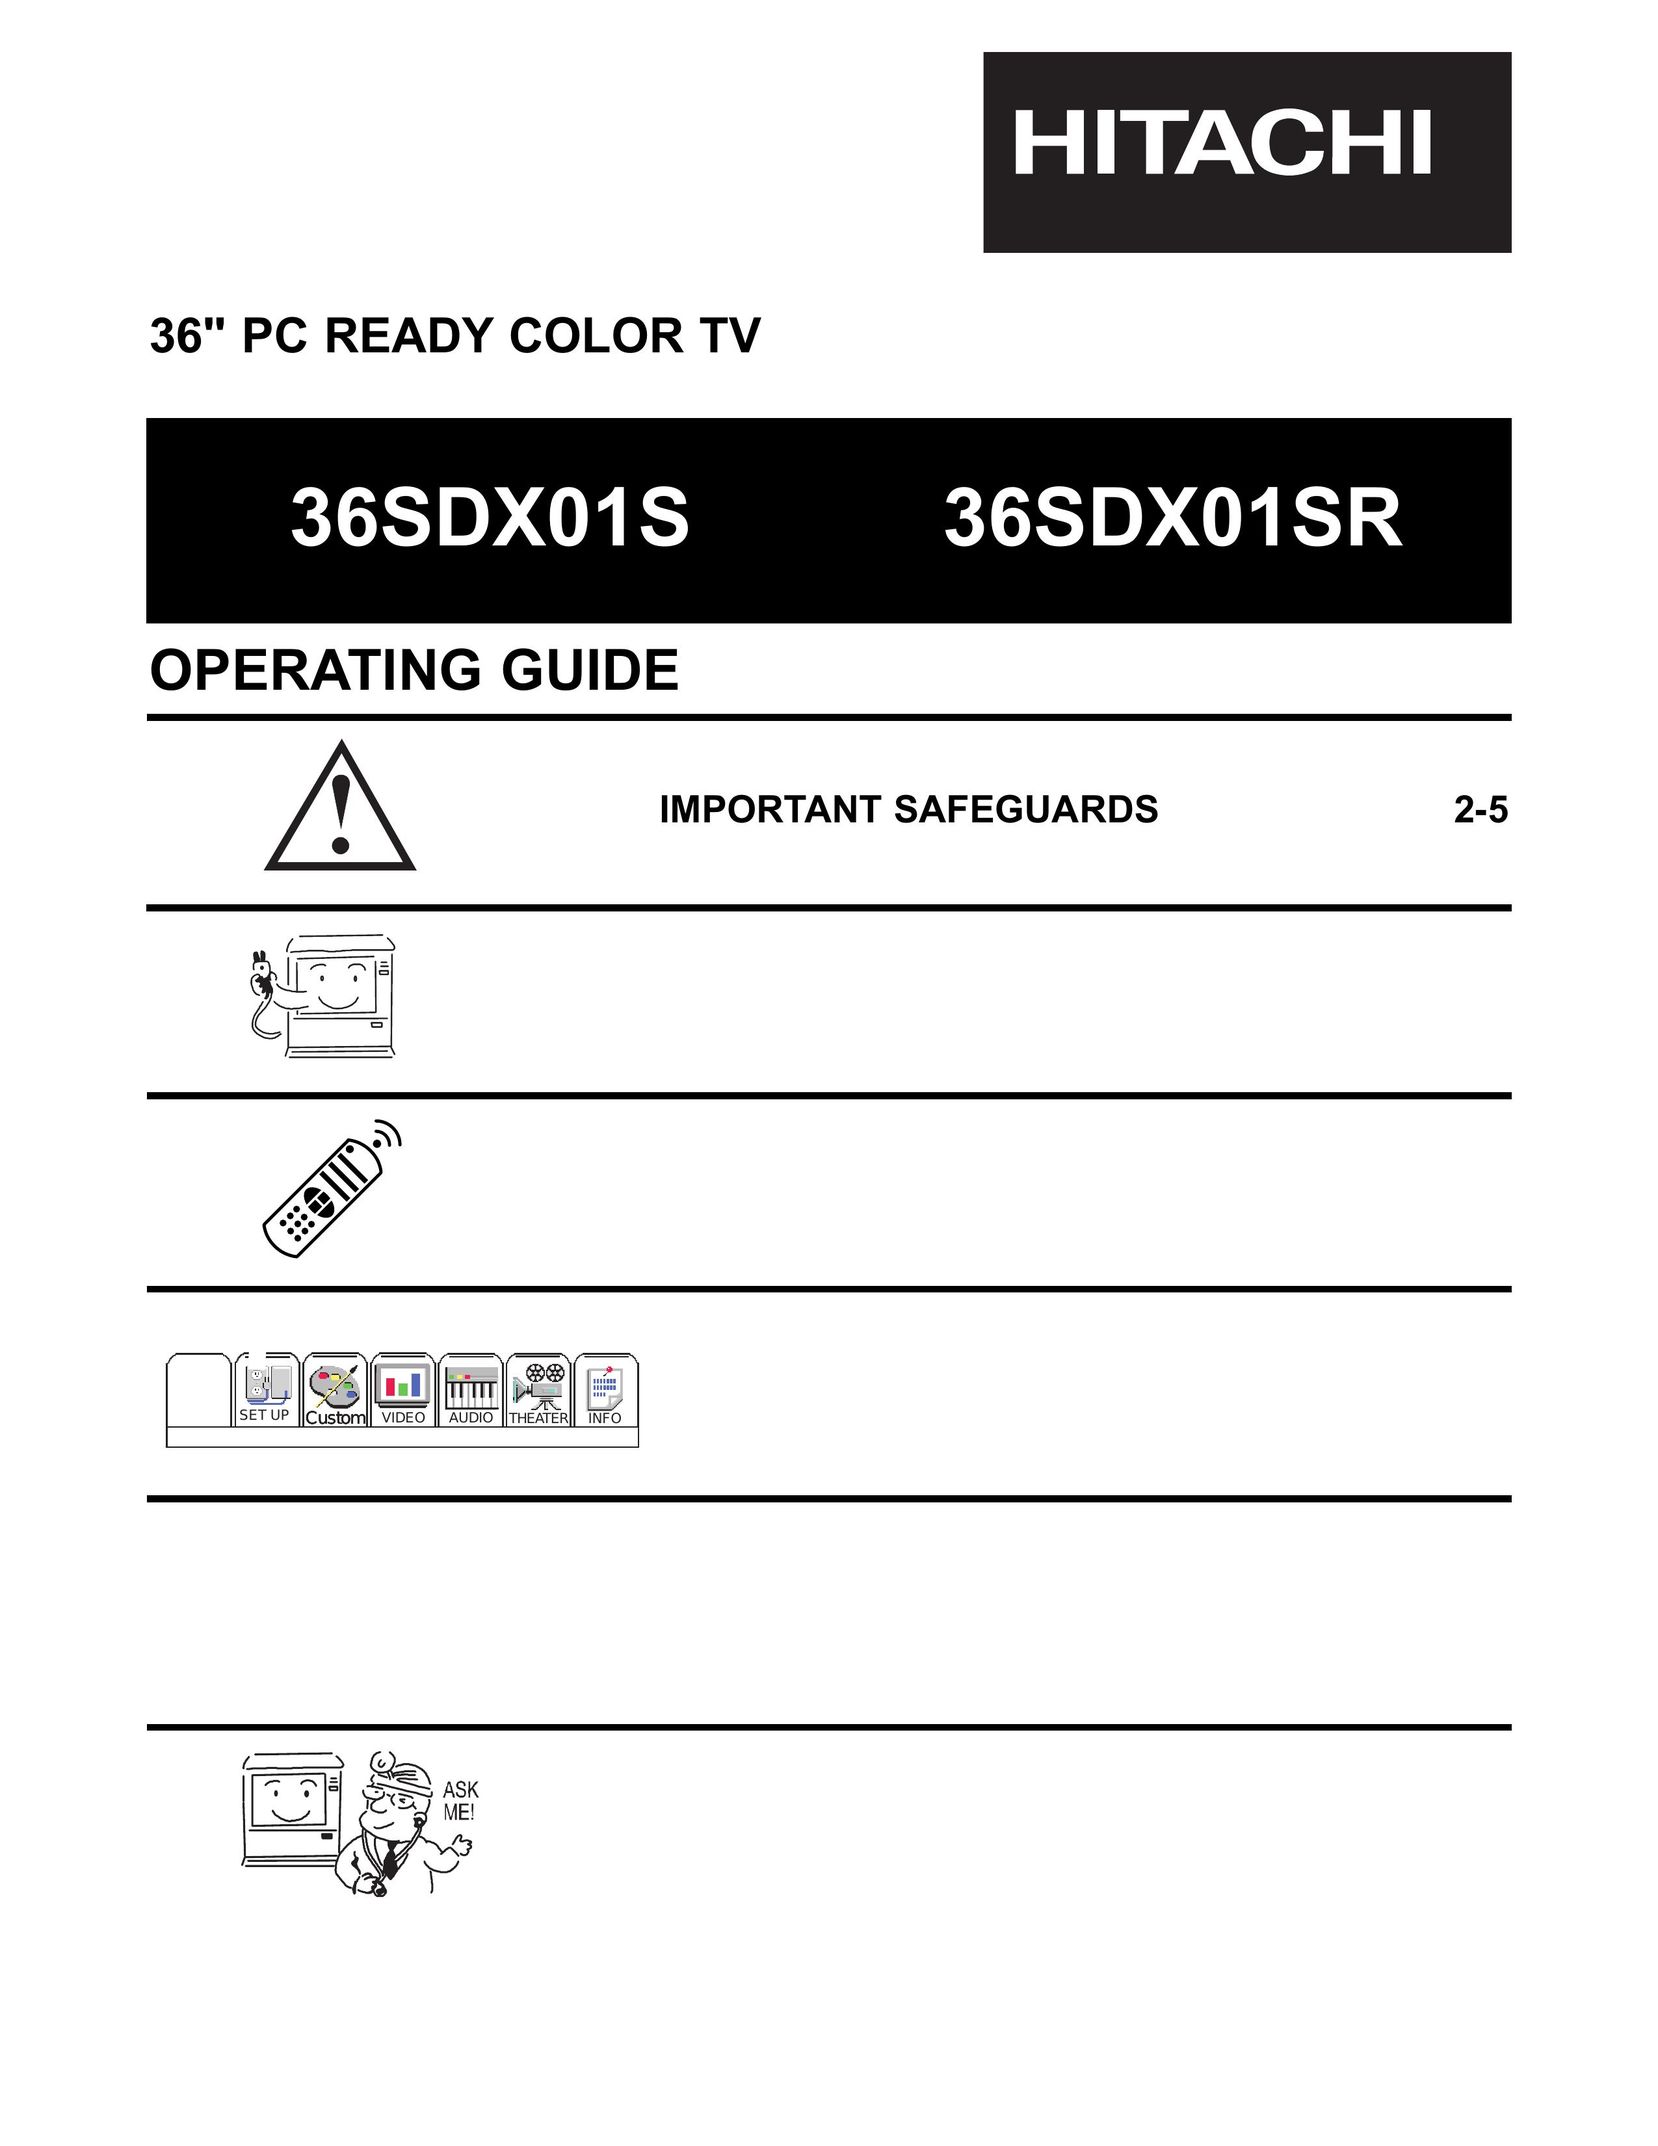 Hitachi 36SDX01S CRT Television User Manual